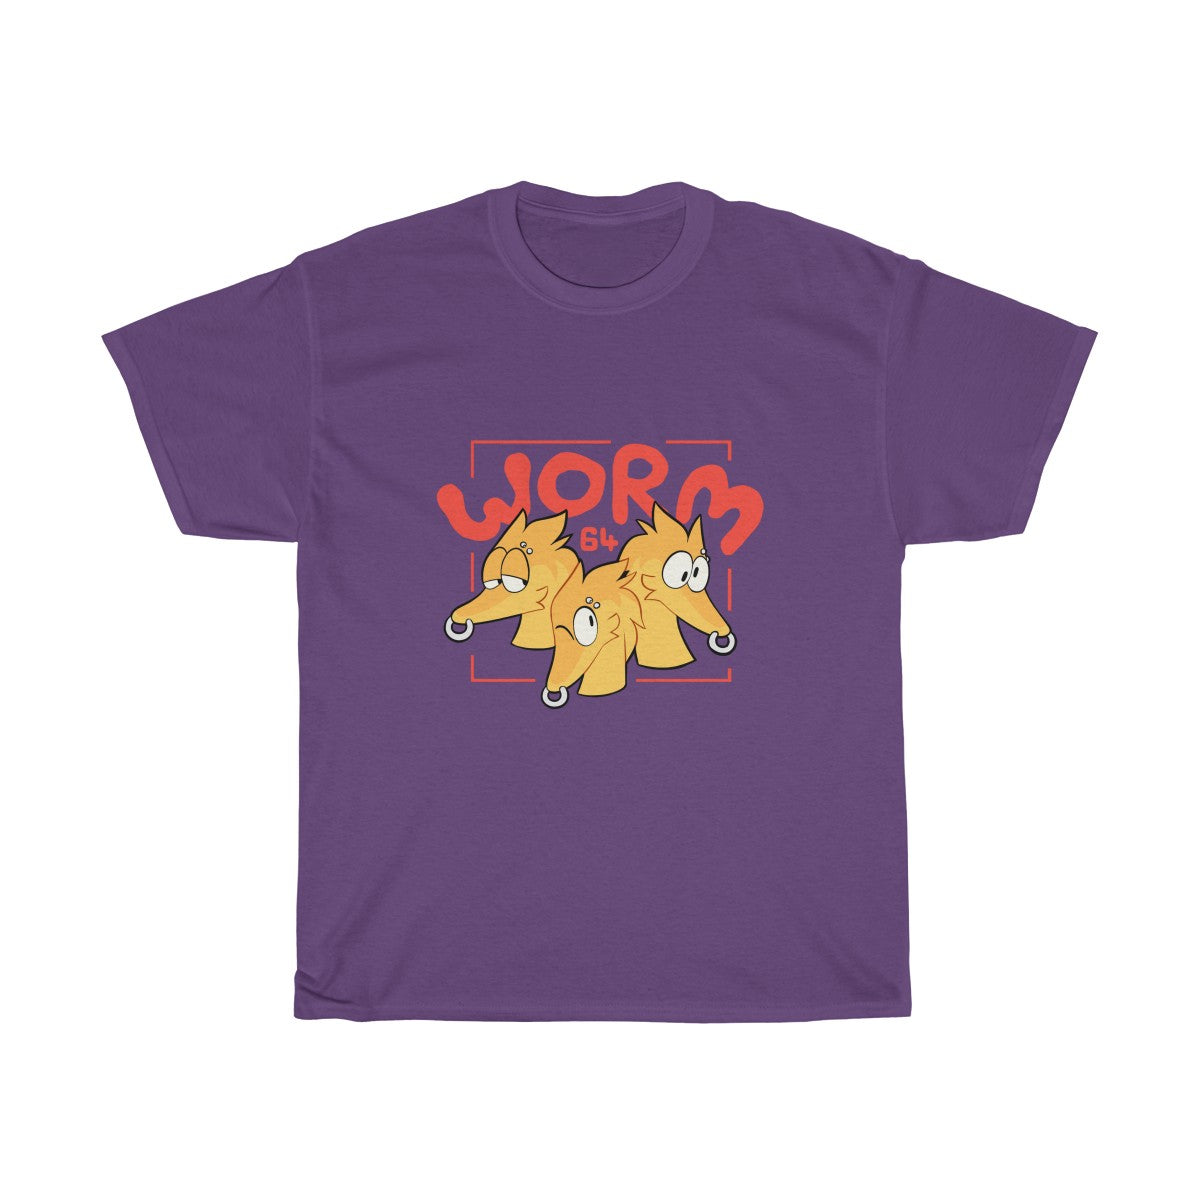 Worm 64 - T-Shirt T-Shirt Motfal Purple S 